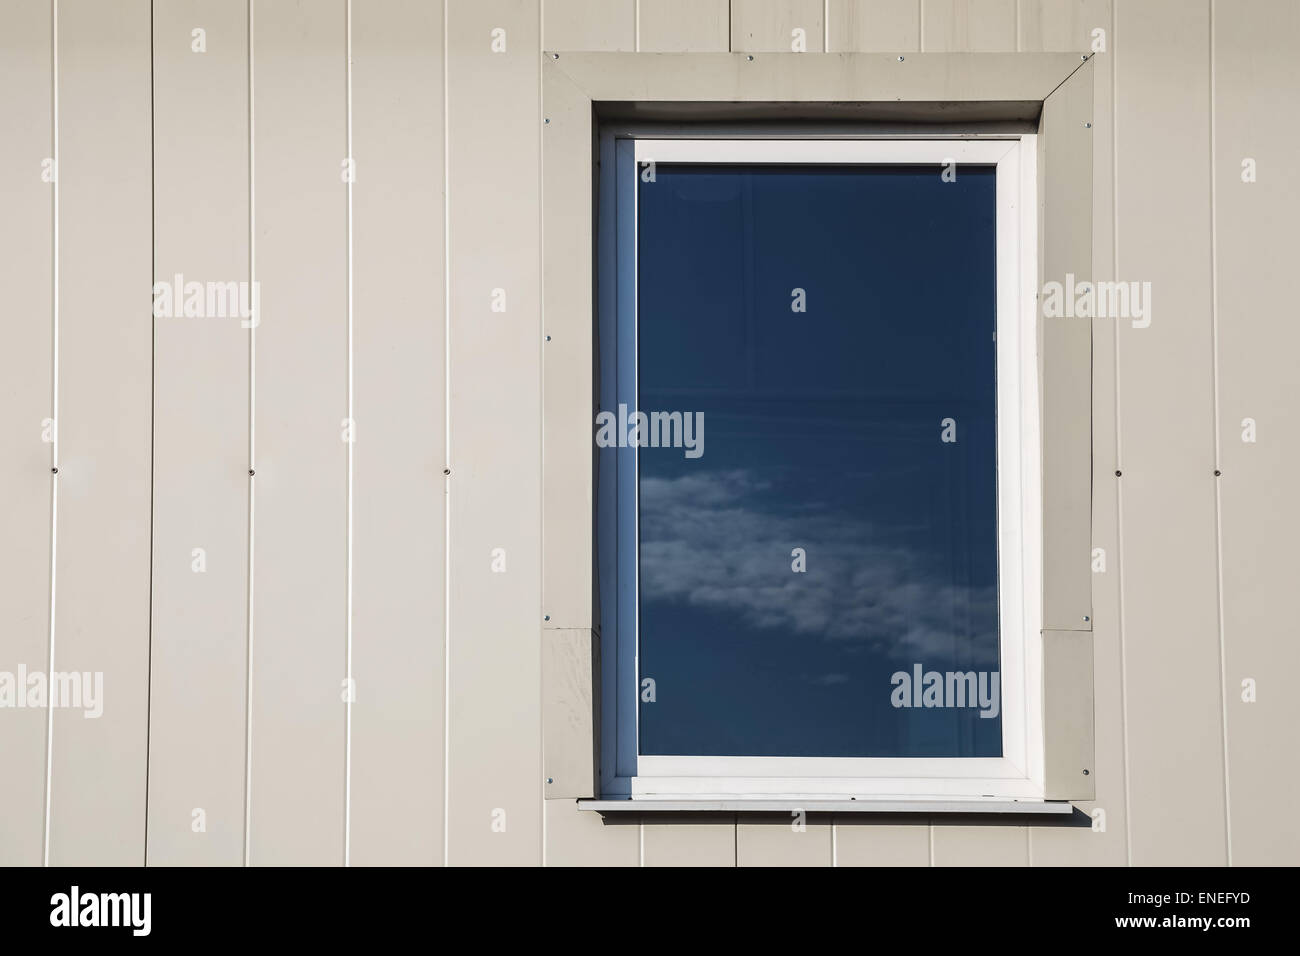 Fenster mit Himmel Reflexion in hellgelber Farbe Kunststoff siding Paneele Wand Stockfoto